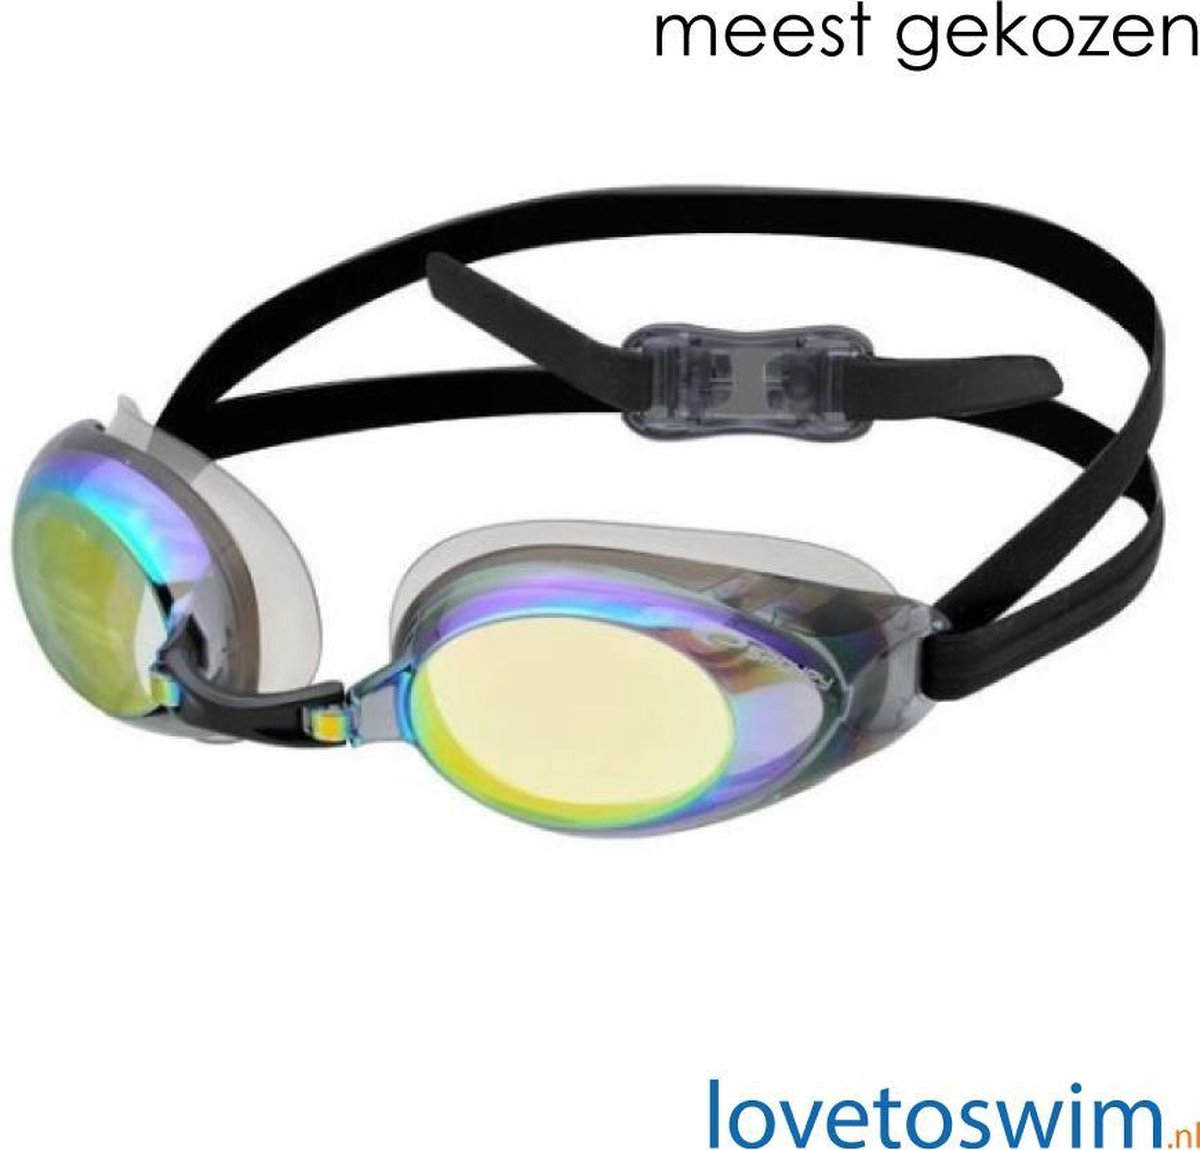 Protrainer Zwembril Mirror - Meest gekozen